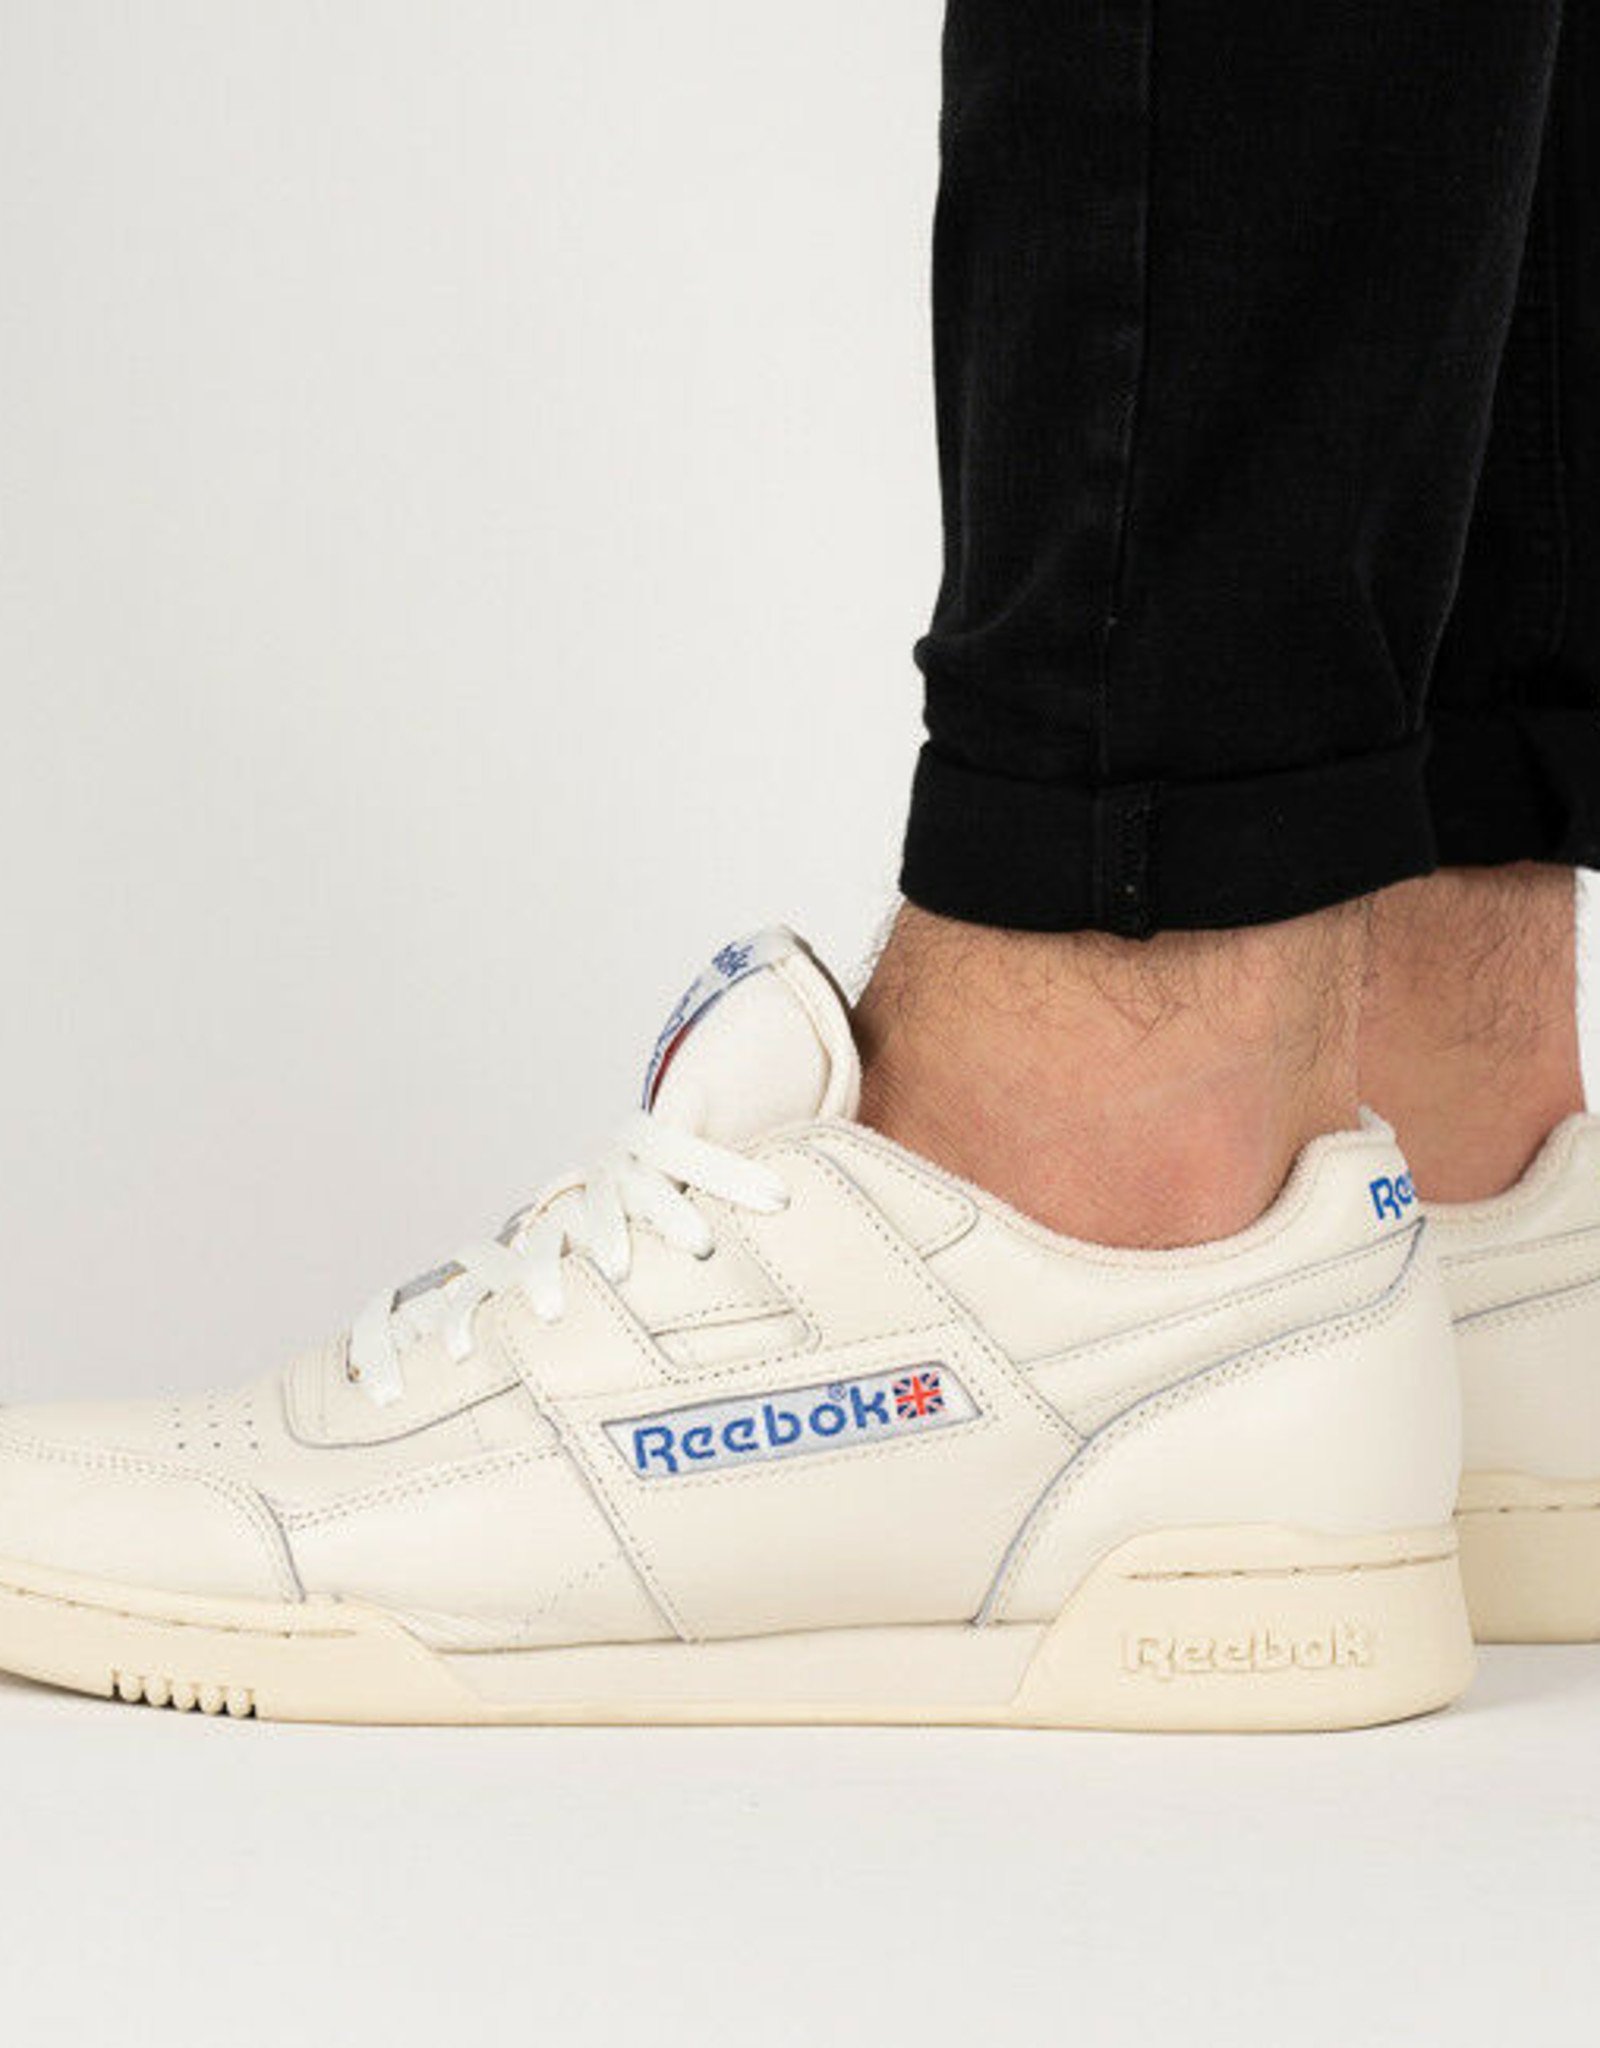 1987 reebok shoes